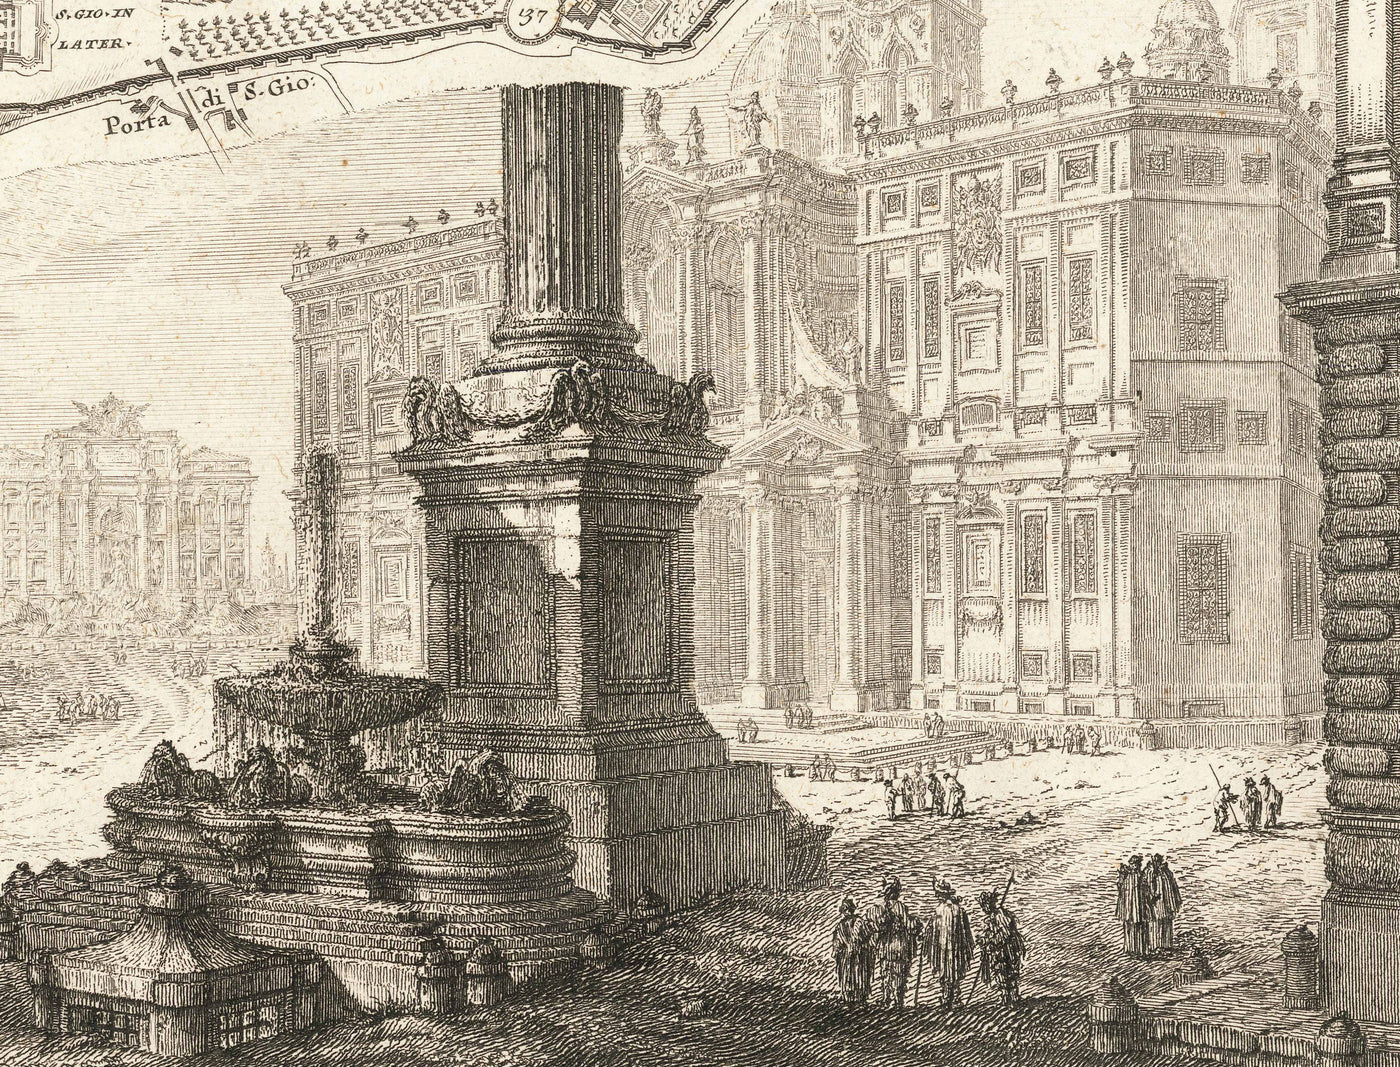 Seltene alte Karte von Rom, Italien von Nolli & Piranesi, 1748 - Vatikan, St. Peter's Basilica, Trevi Fountain, Kolosseum